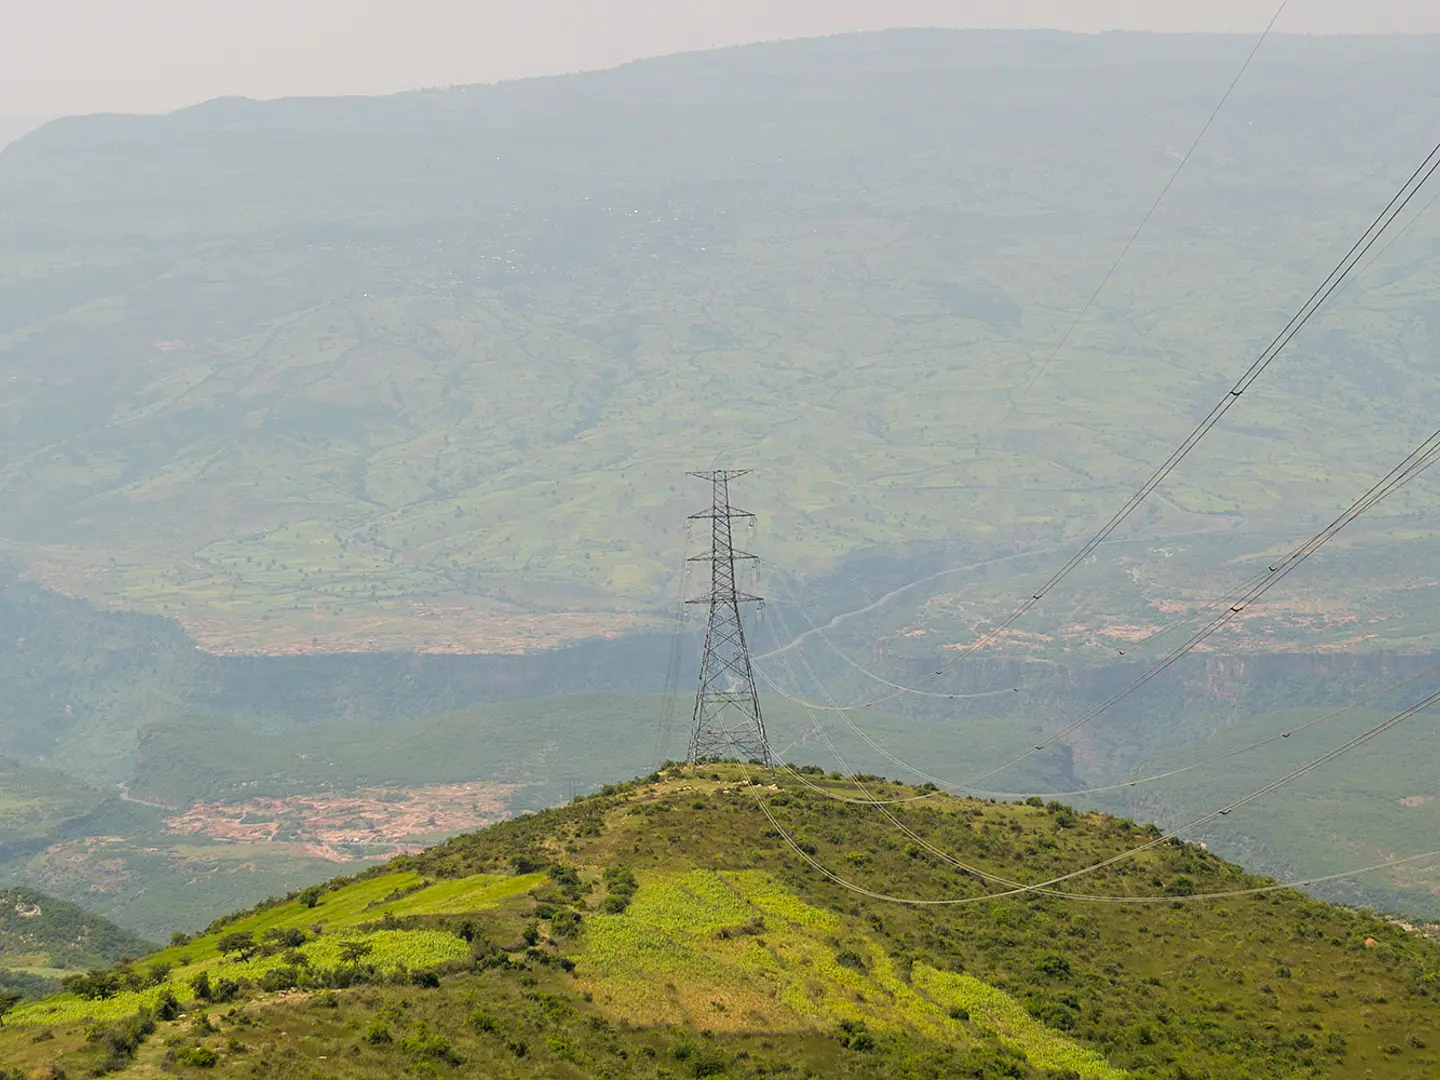 Power lines run across the hilly Amhara region of Ethiopia.